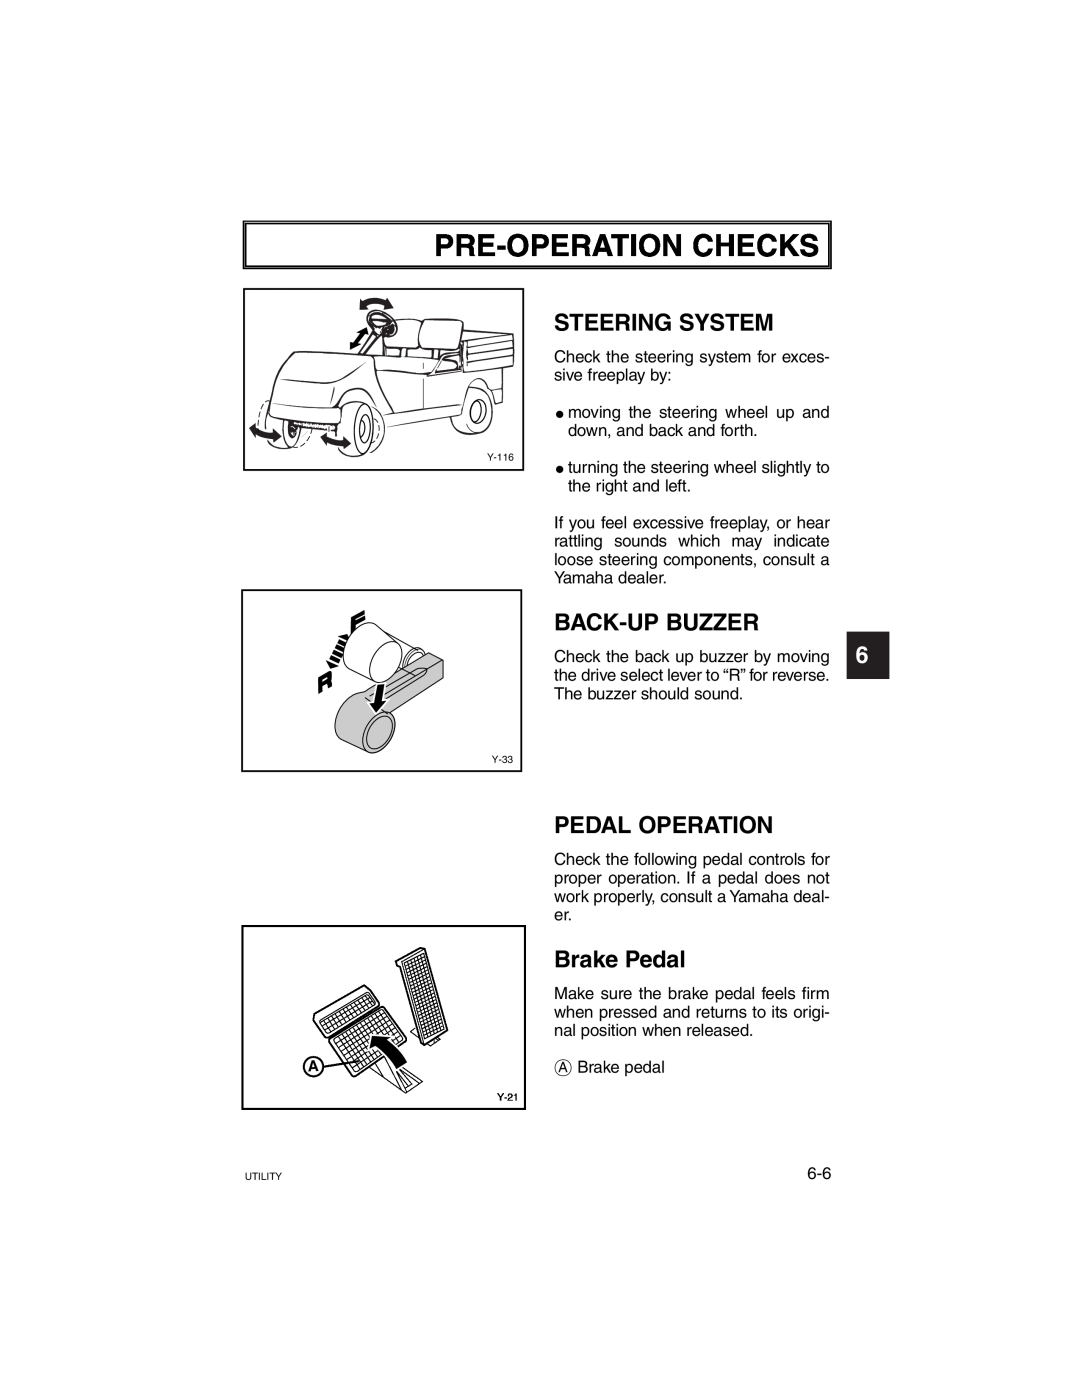 Yamaha G21A manual Pre-Operationchecks, Steering System, Back-Upbuzzer, Pedal Operation, Brake Pedal 